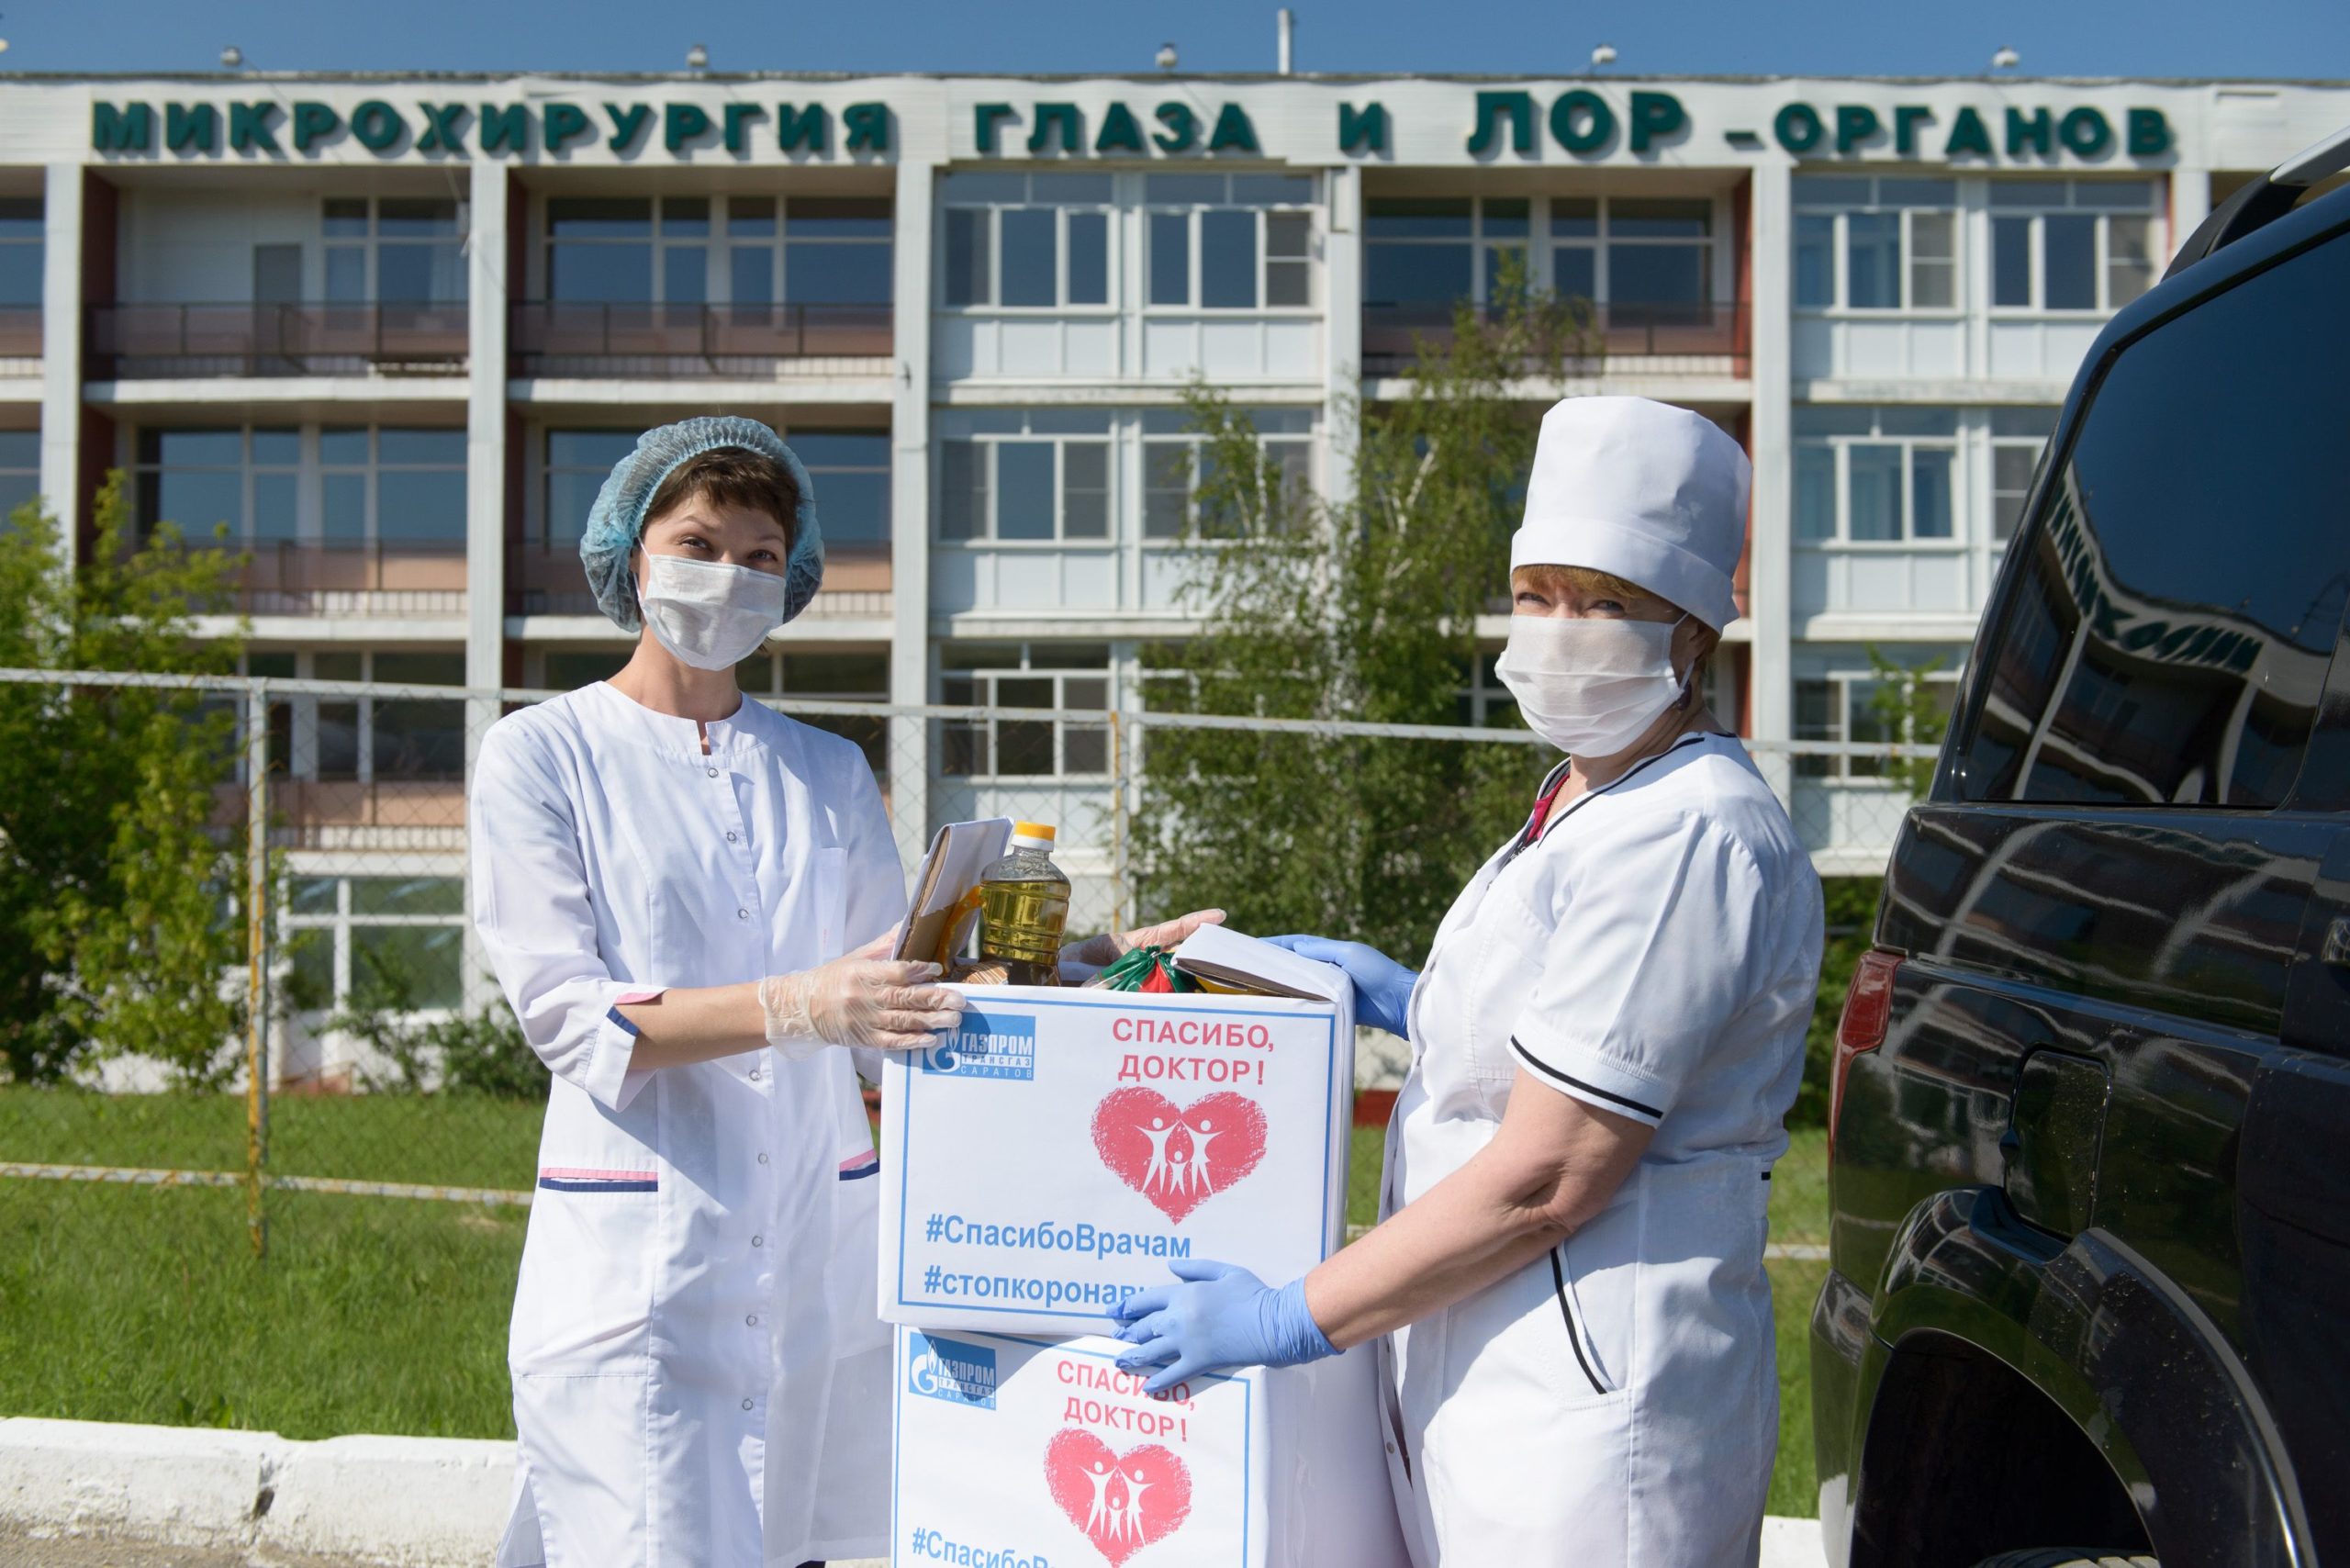 Gazprom Transgaz Saratov supports healthcare institutions